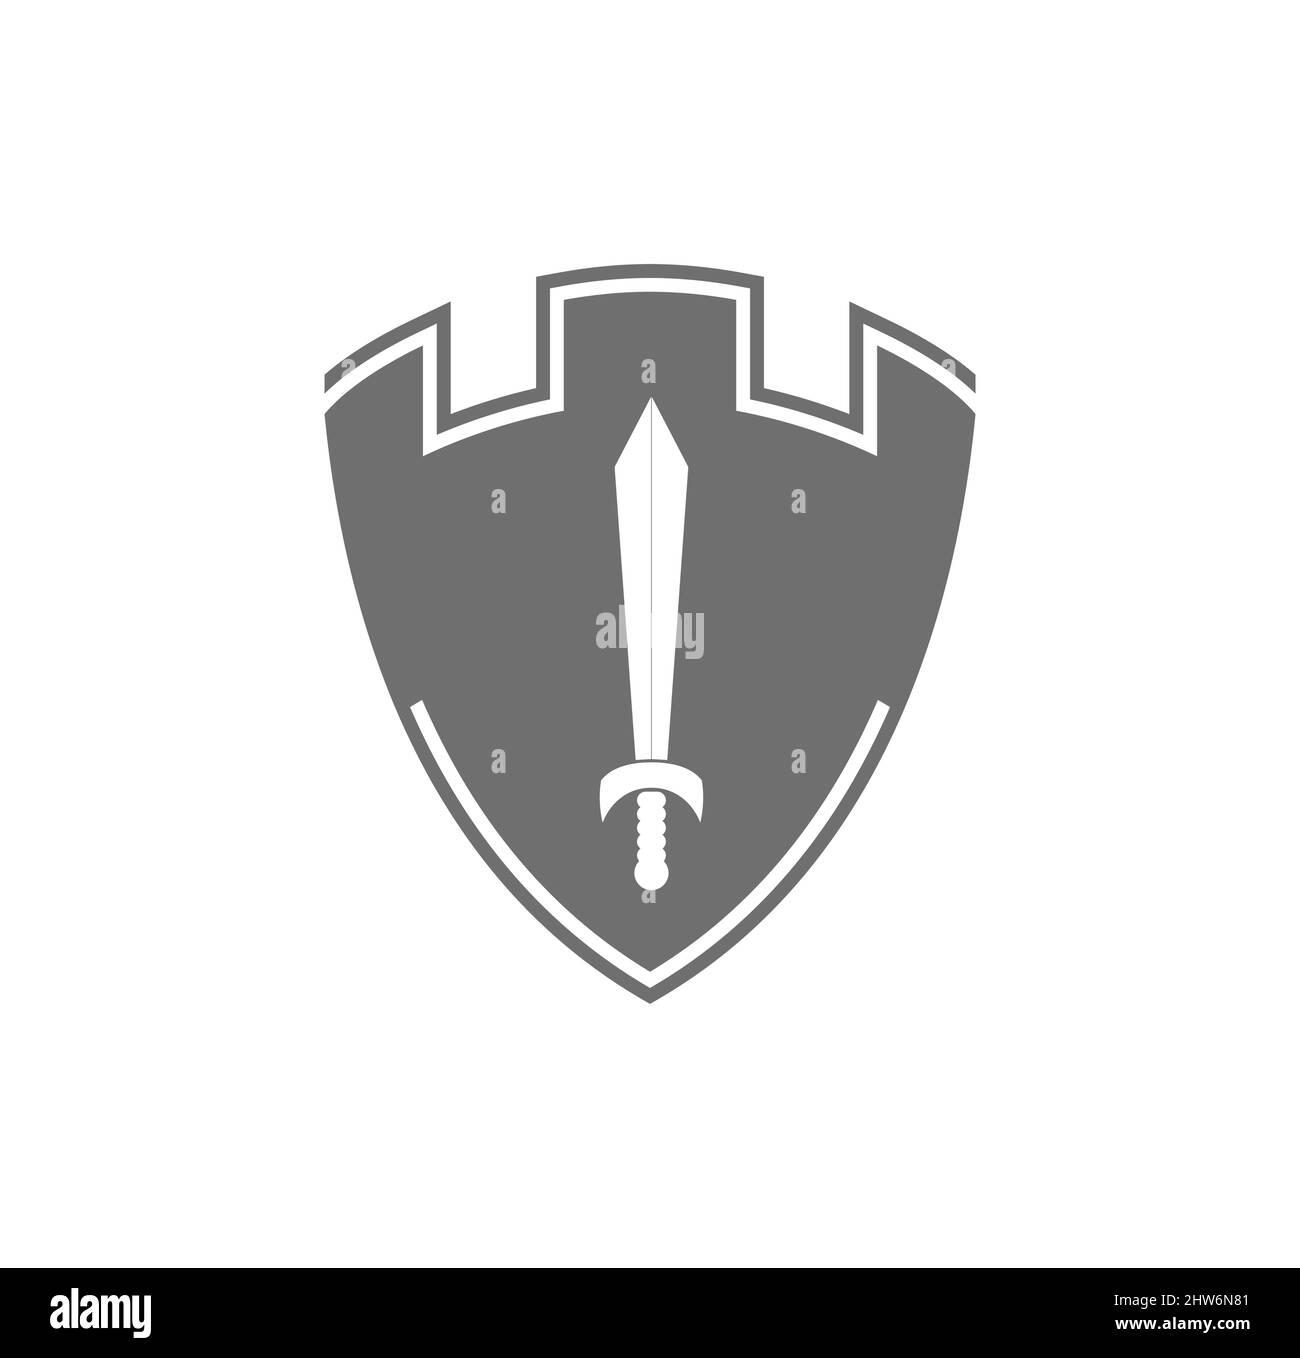 Shield castle with sword logo design illustration vector eps format , suitable for your design needs, logo, illustration, animation, etc. Stock Vector